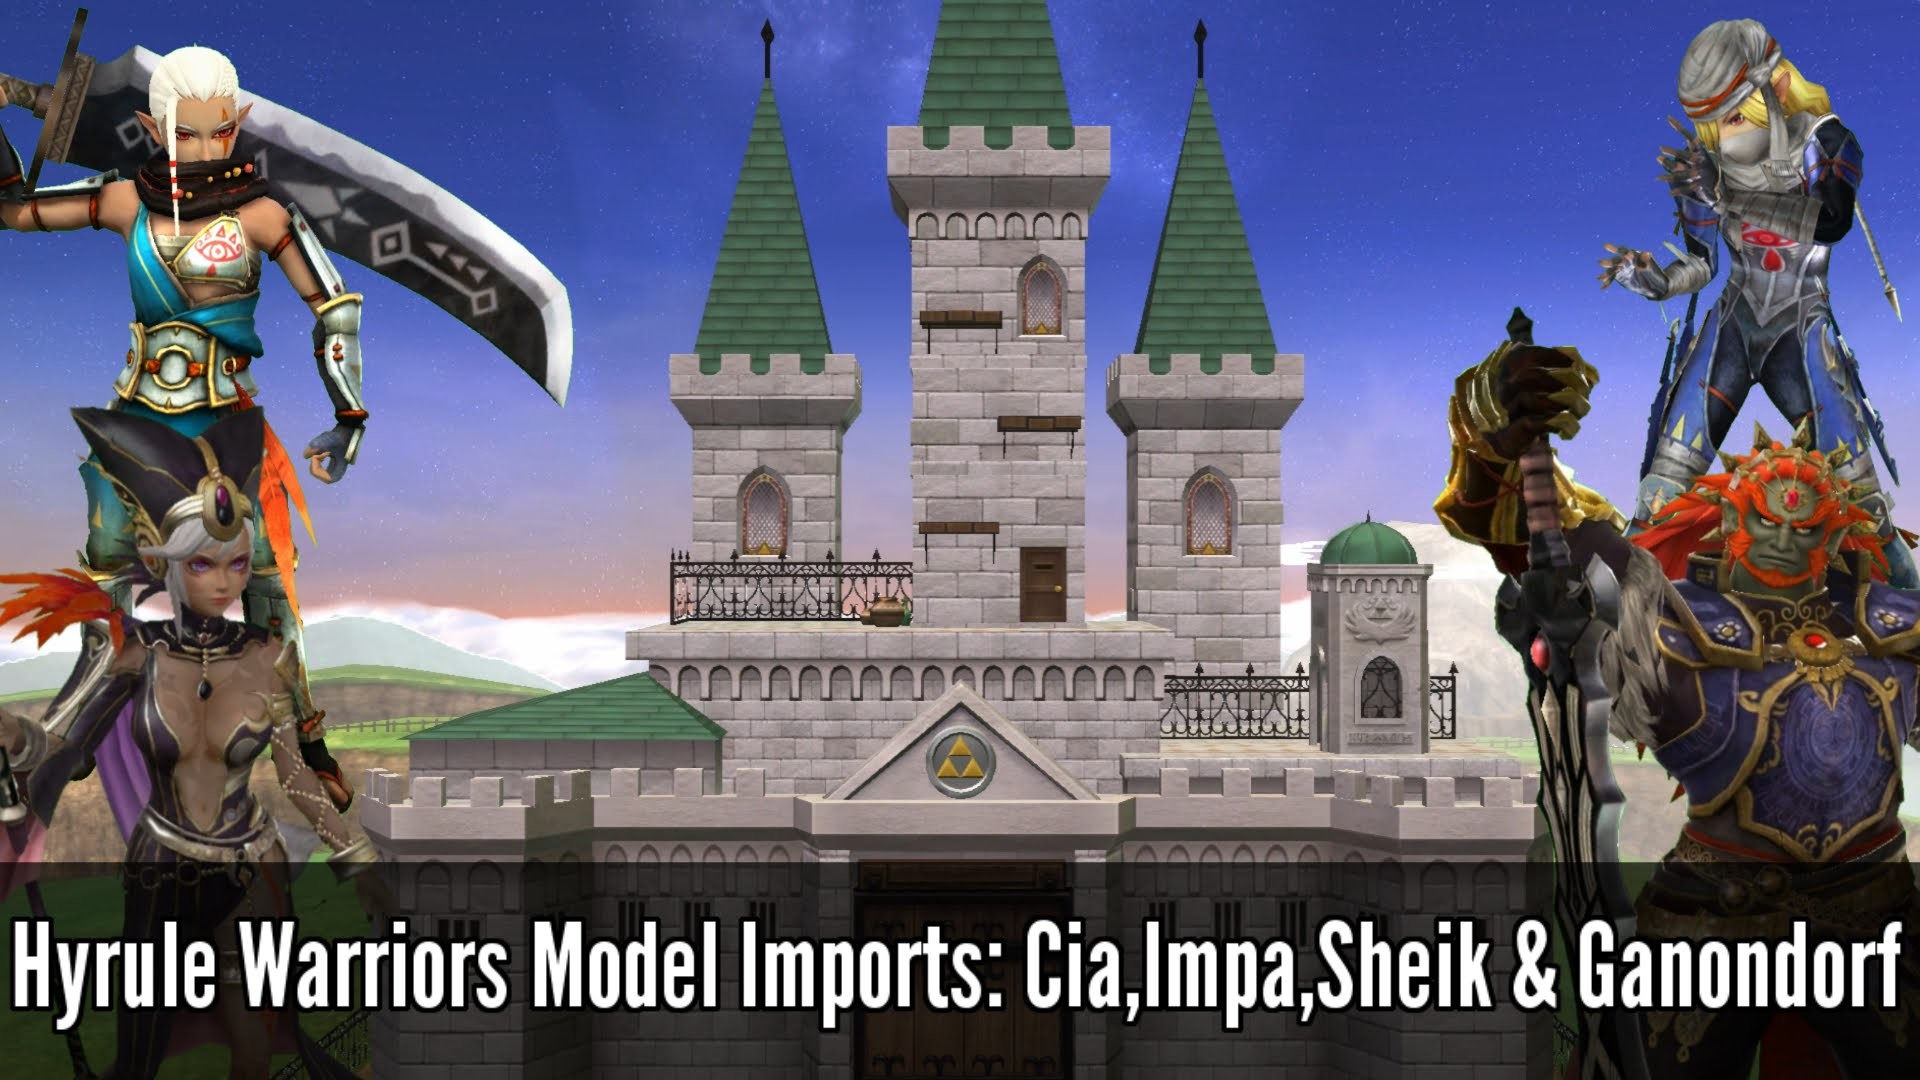 1920x1080 Hyrule Warriors Model Imports: Cia,Impa,Sheik & Ganondorf - Super Smash  Bros. Wii U Mods - YouTube